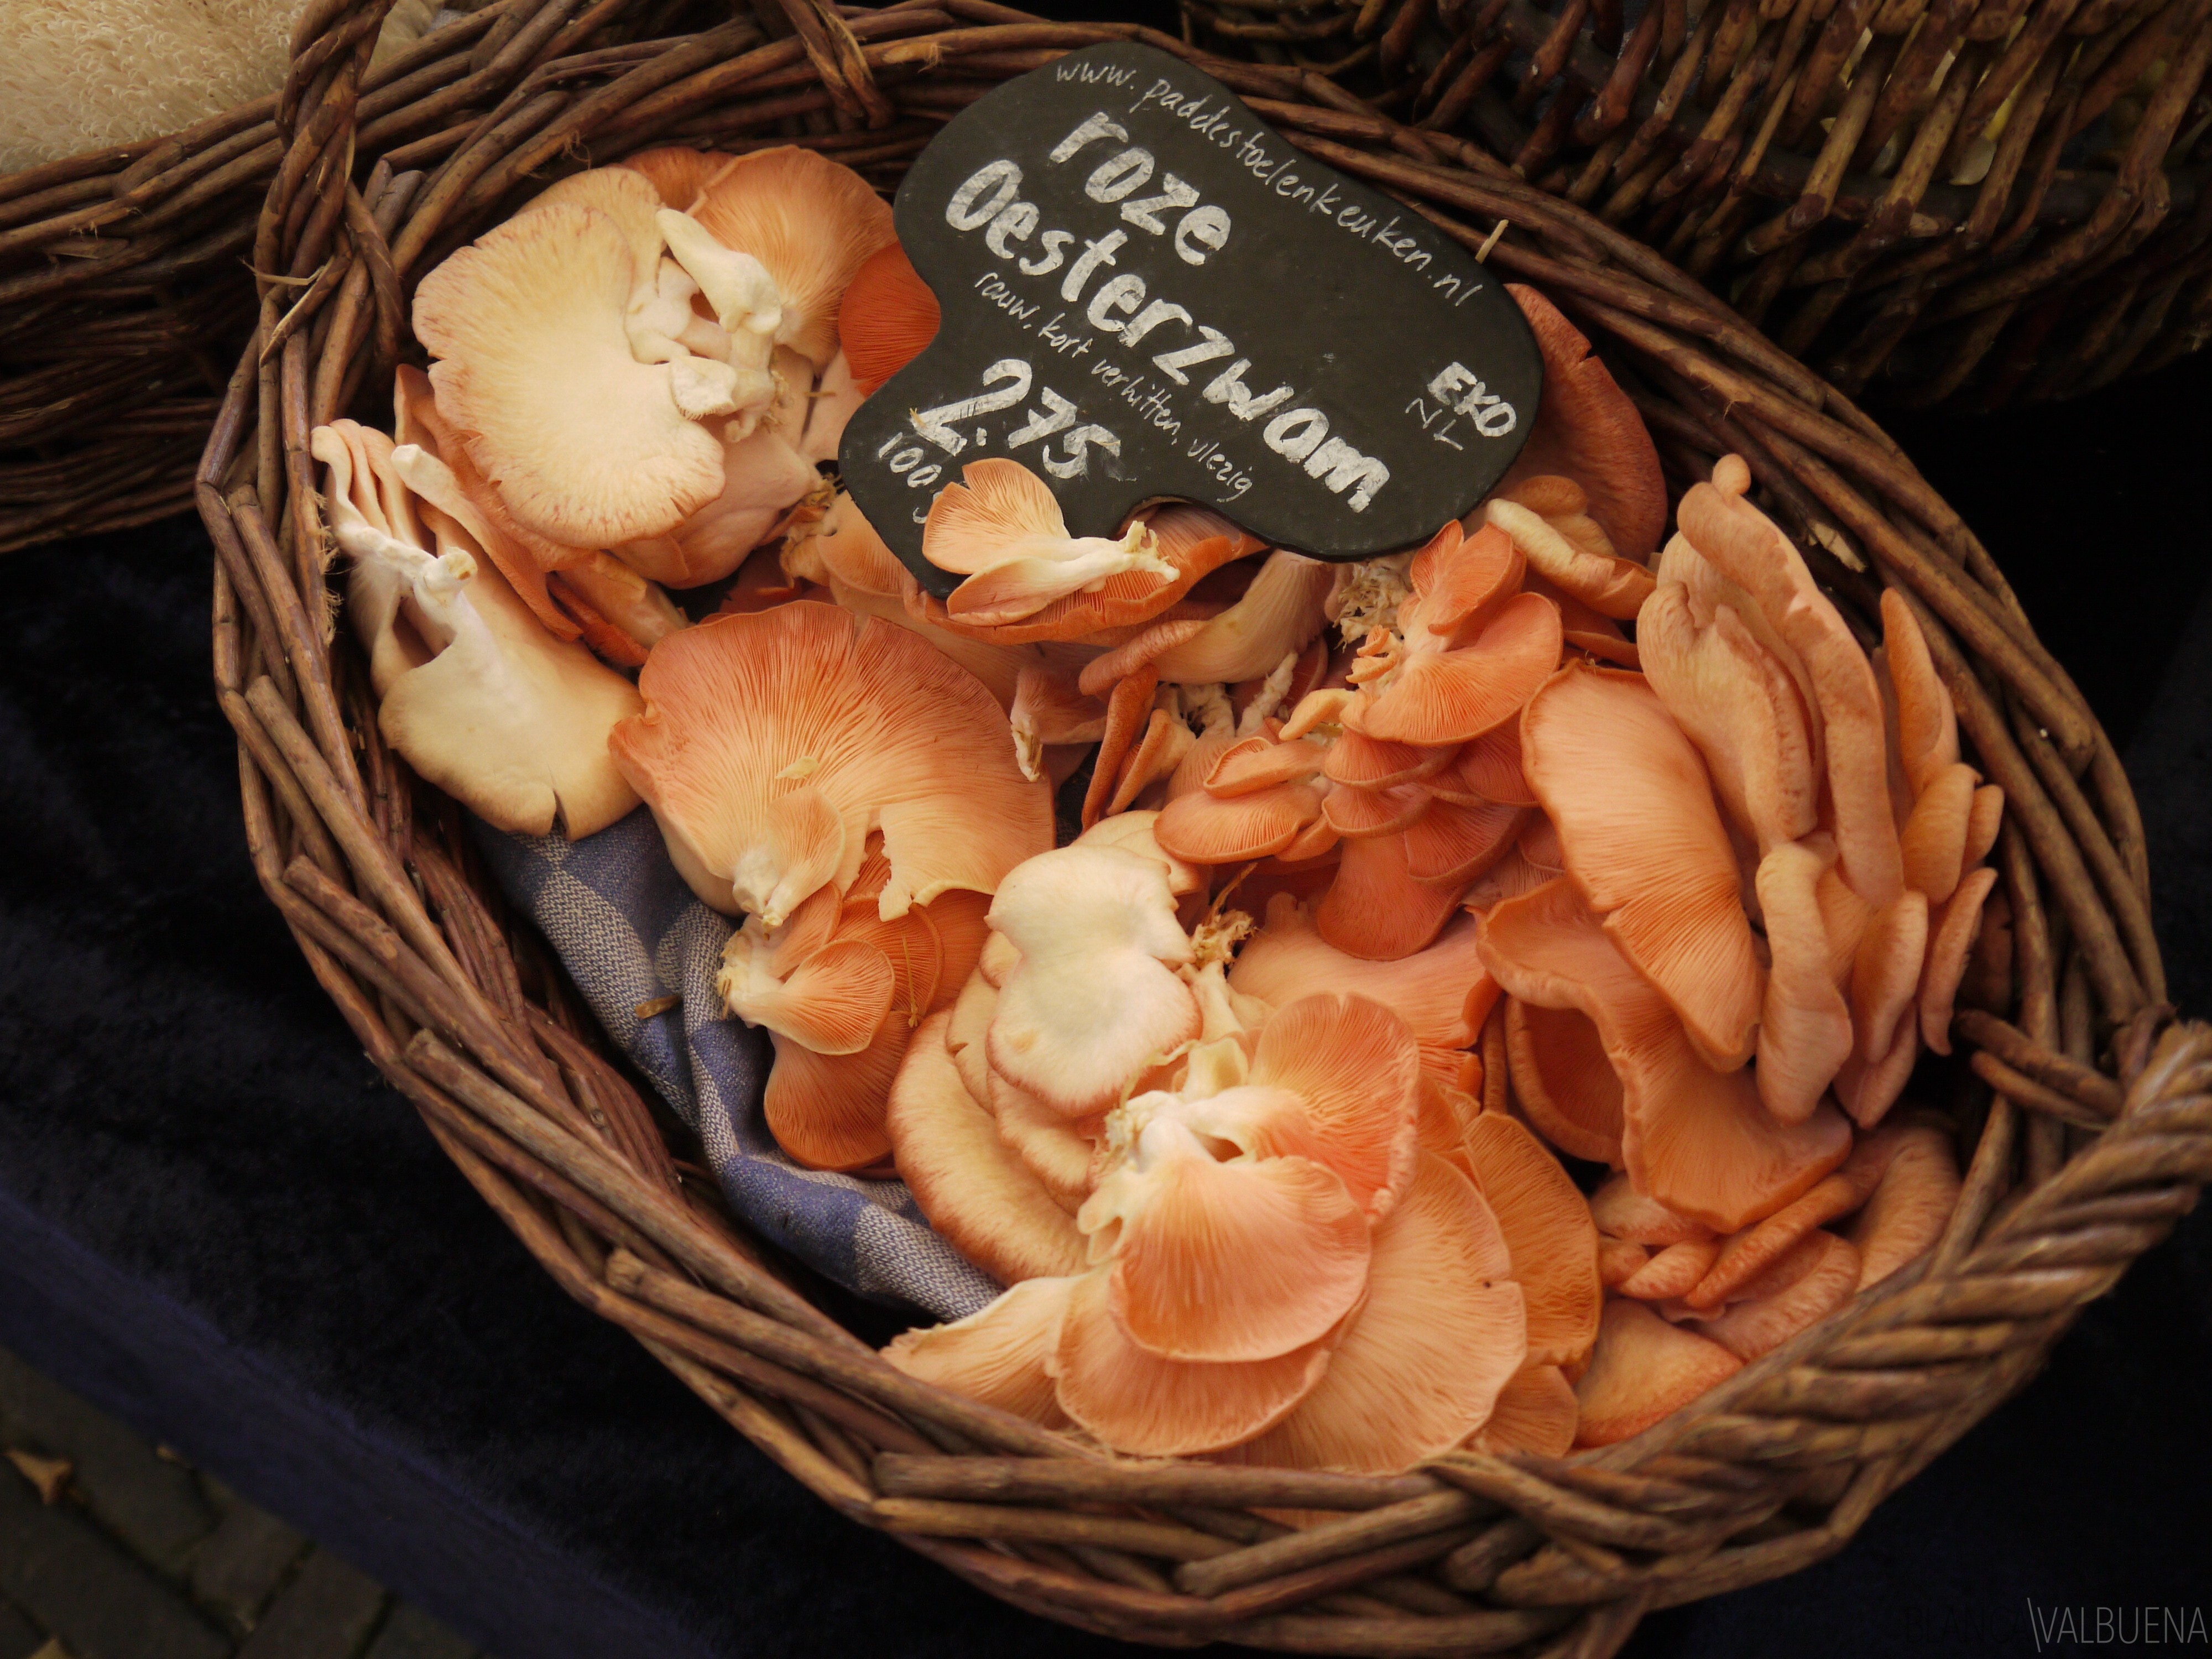 You can buy Mushrooms in Amsterdam at the Noordermarkt Farmers Market